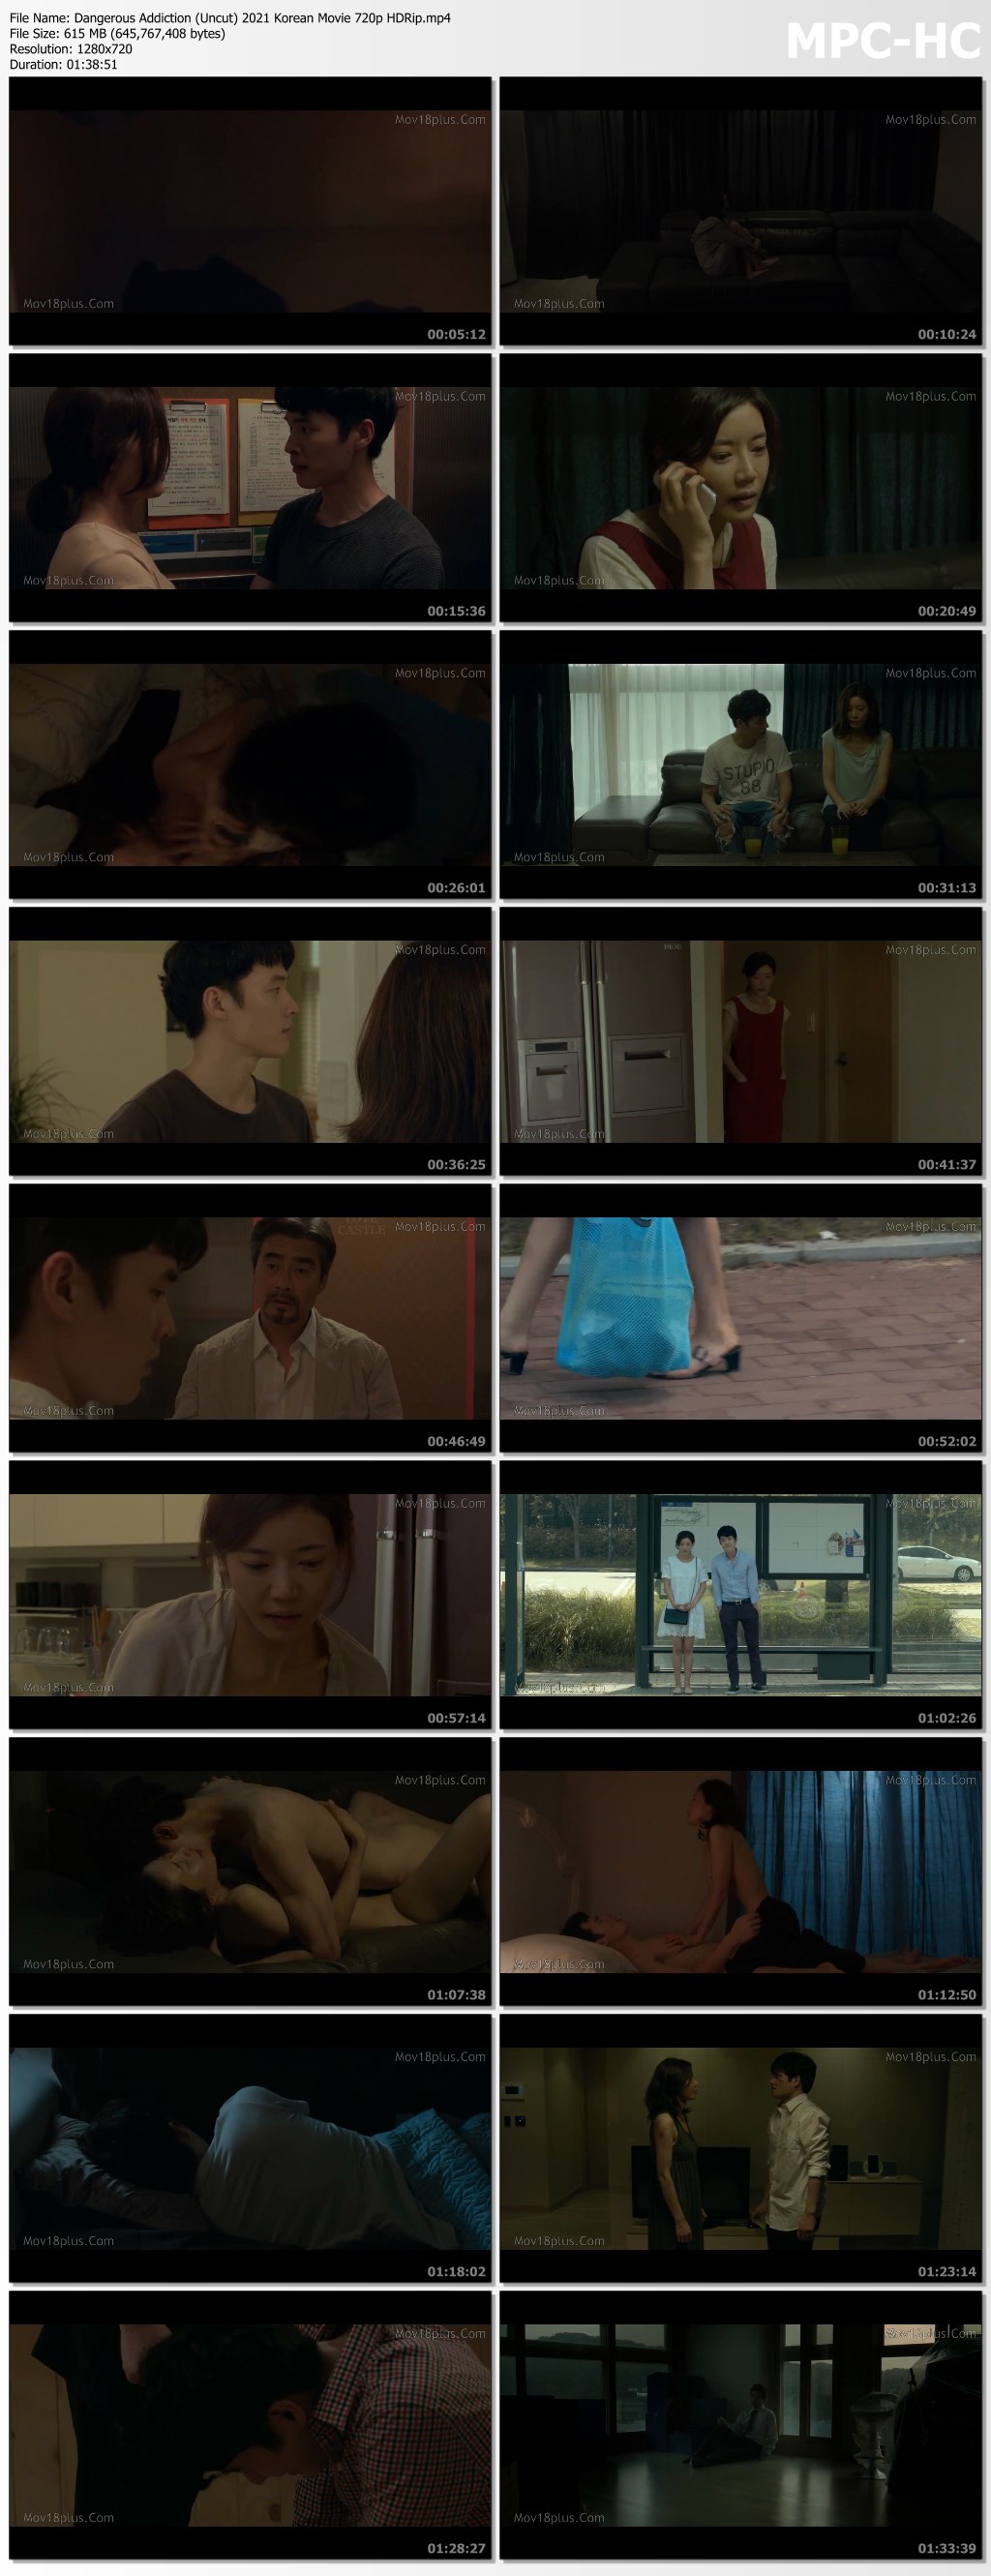 Dangerous Addiction (Uncut) 2021 Korean Movie 720p HDRip.mp4 thumbs